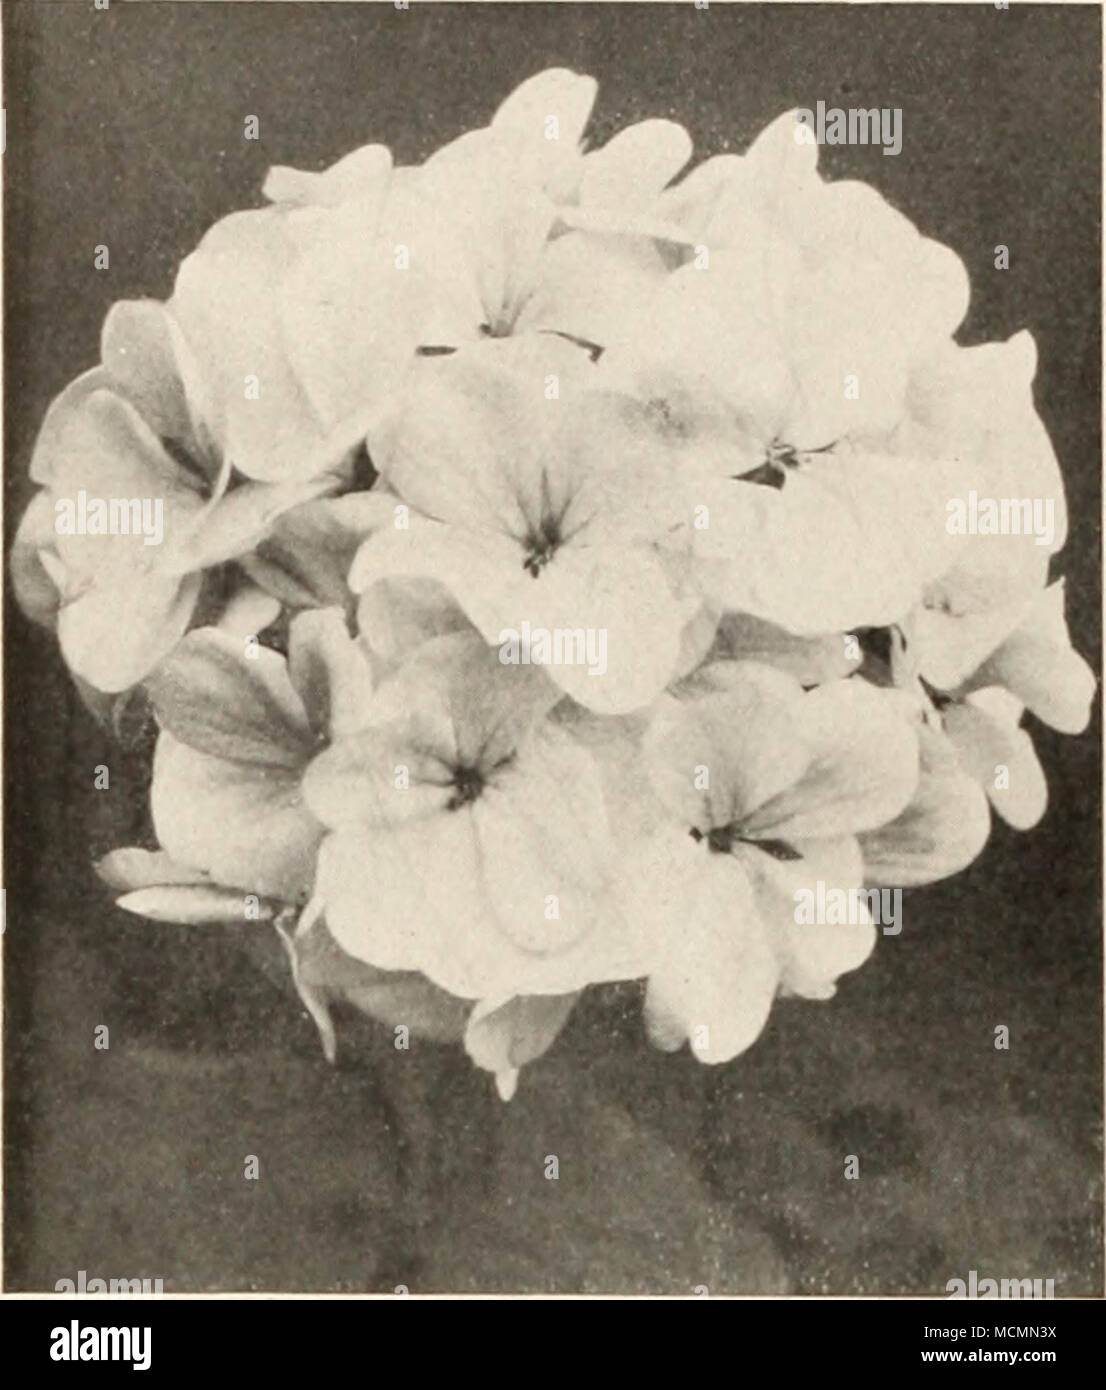 . Single Geranium Choice Dingee Geraniums The Best New Double Geraniums I'rlrCN, NironK pliintN. tr&gt;o. rnclt. 4 for ifl.OI) r&lt;;r Ni-t of lU. i^o. Jean Viaiiil. Soft. pink, white blotches. Double .f»- L.lfe. Outer flowers brilliant red; cen- ter pure white liowers. E. H. Trego. Dazzling scarlet, velvety. AIplion.se Rienrd. Semi-double; orange-red. Thomns Meelian (New Bruant Geranium). Seml- doublf, biijflu magenta. Superb. Bcniite Pultevlne. Bright salmon-pink. S. .v. Nutt. Rich, dark crimson. Superb. nerthe de Prlsellla. Dwarf habit. Fine bedder. Bright silver rose-pink. Mme. Reeaniler Stock Photo